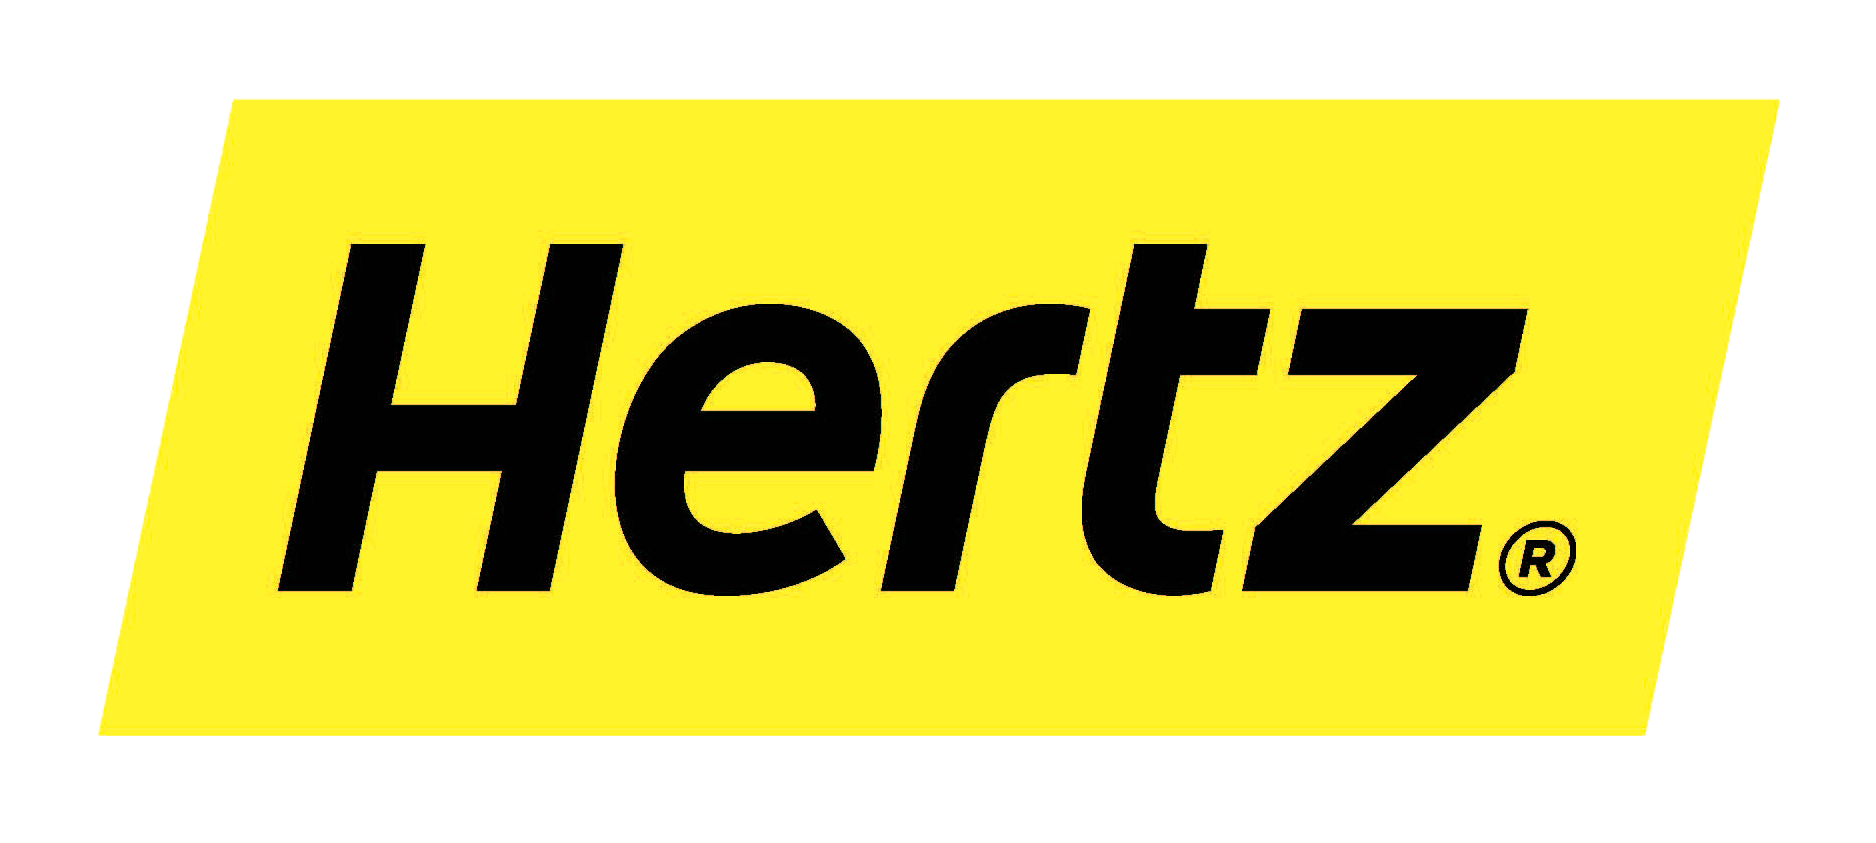 Hertz Logo PNG Image - PurePNG | Free transparent CC0 PNG Image Library